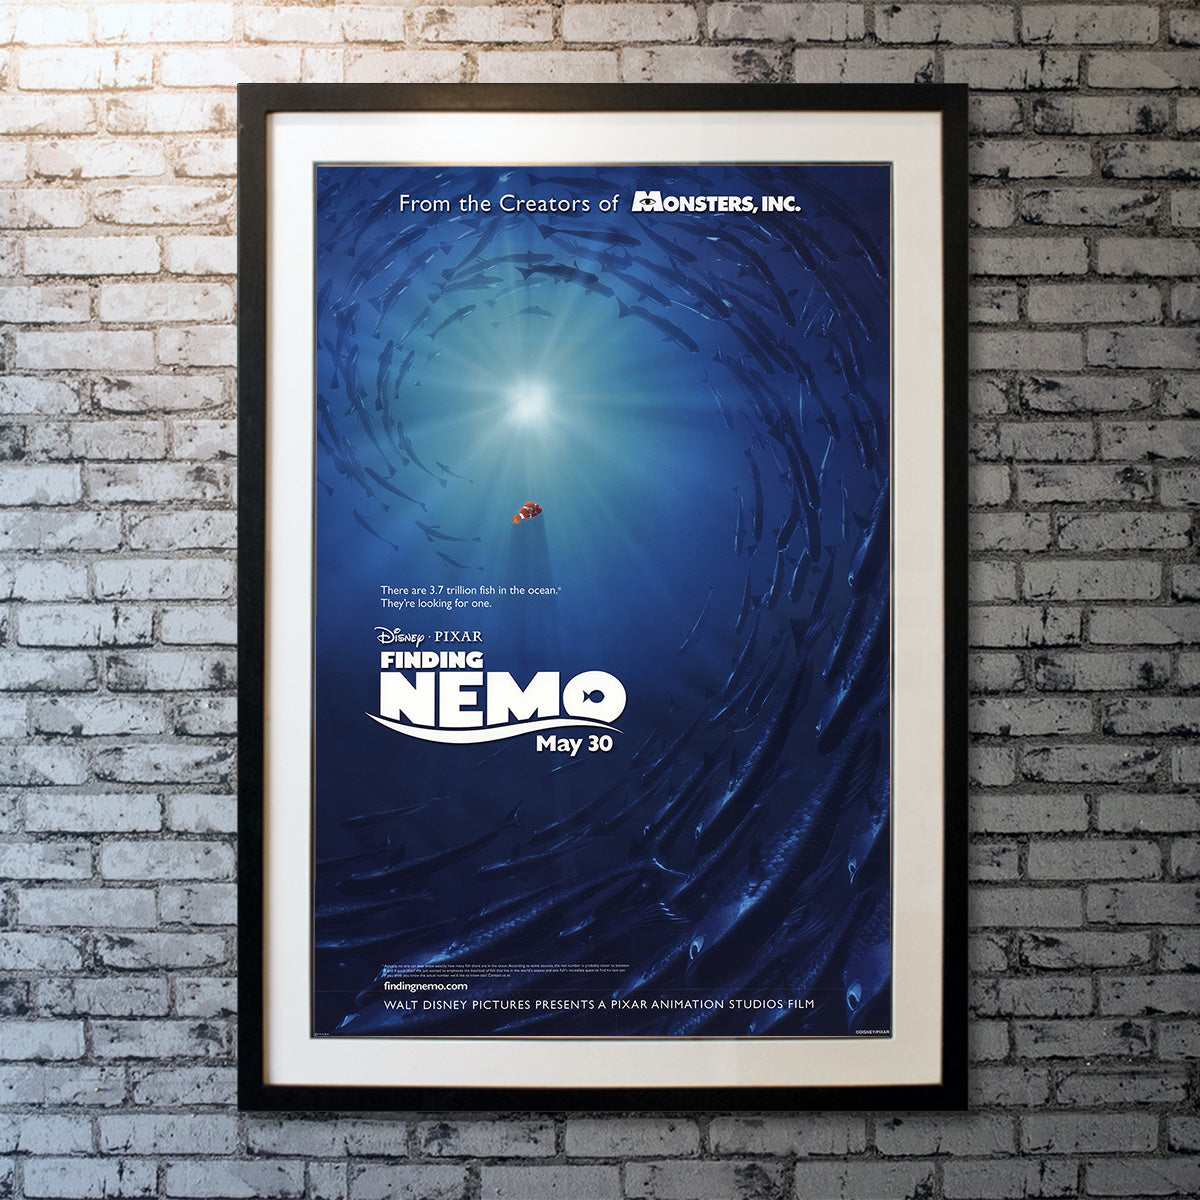 Original Movie Poster of Finding Nemo (2003)